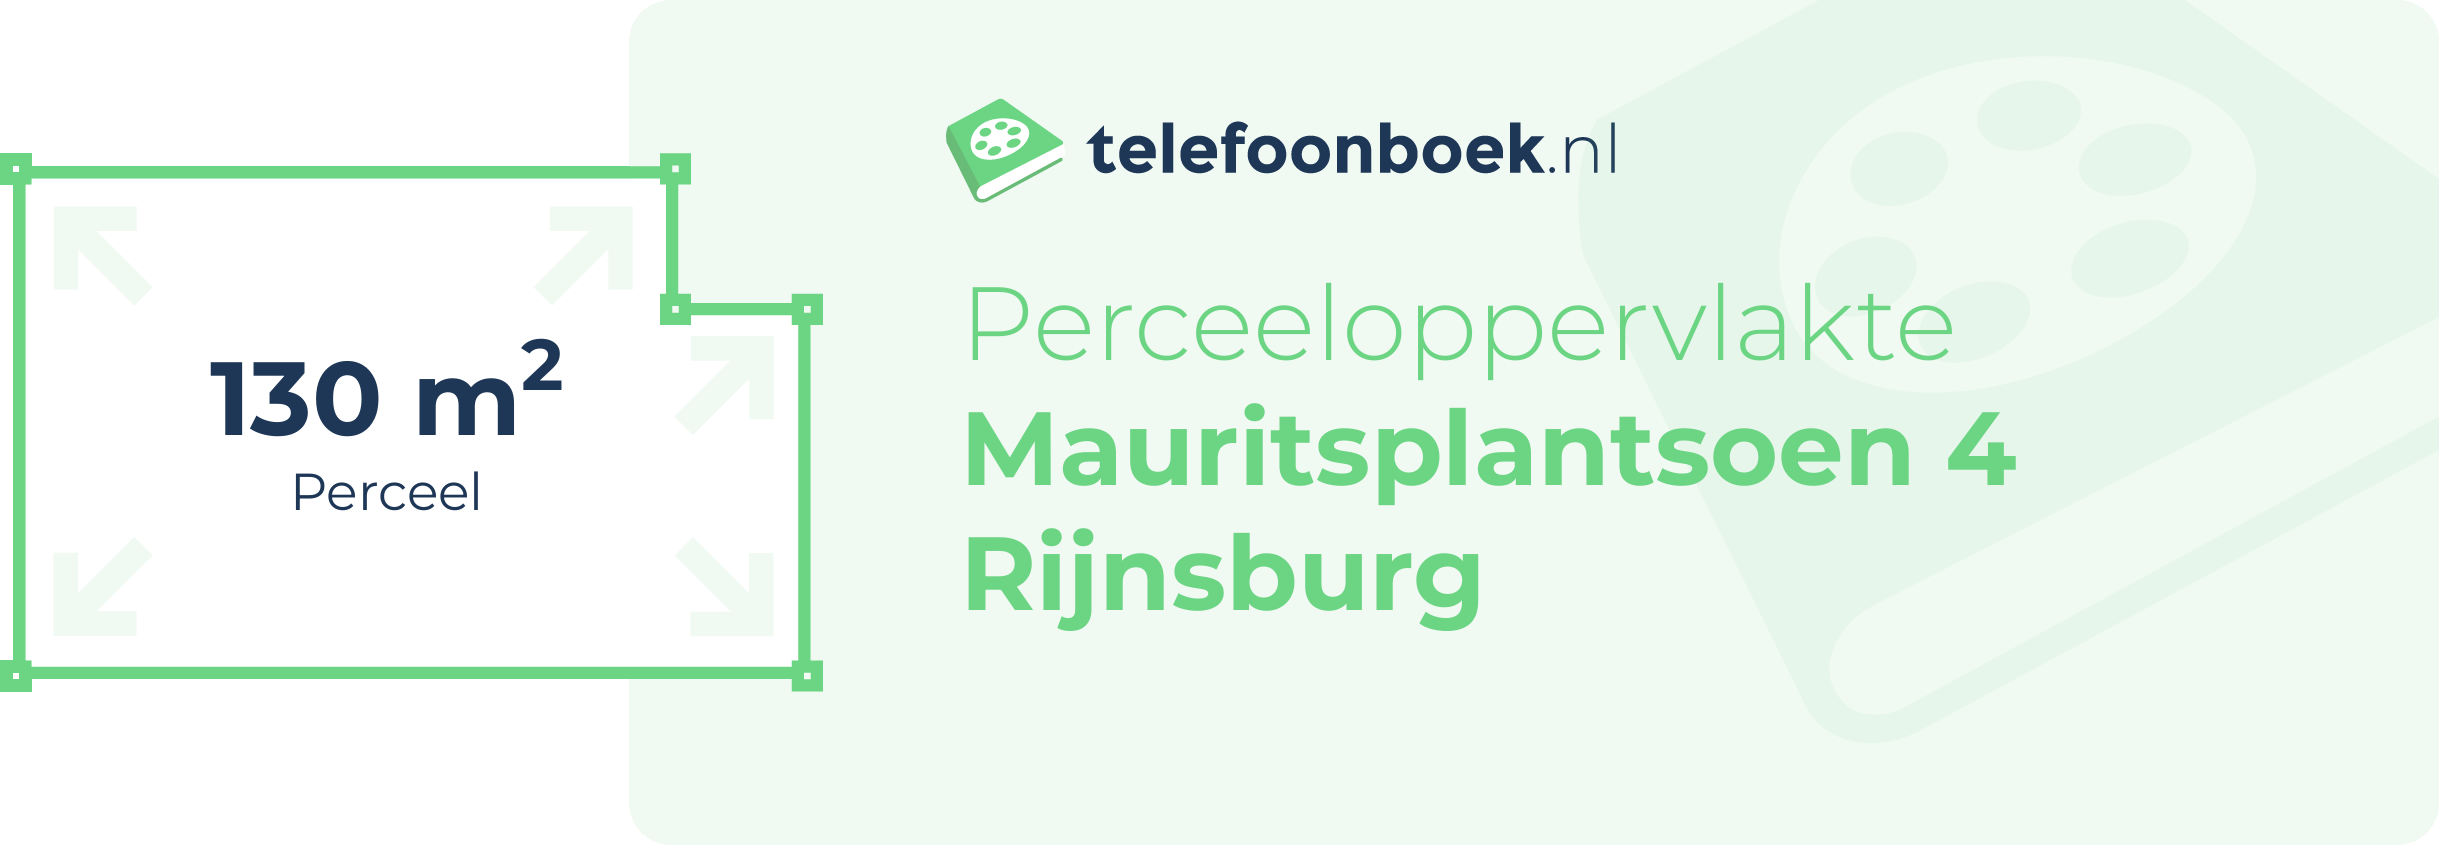 Perceeloppervlakte Mauritsplantsoen 4 Rijnsburg